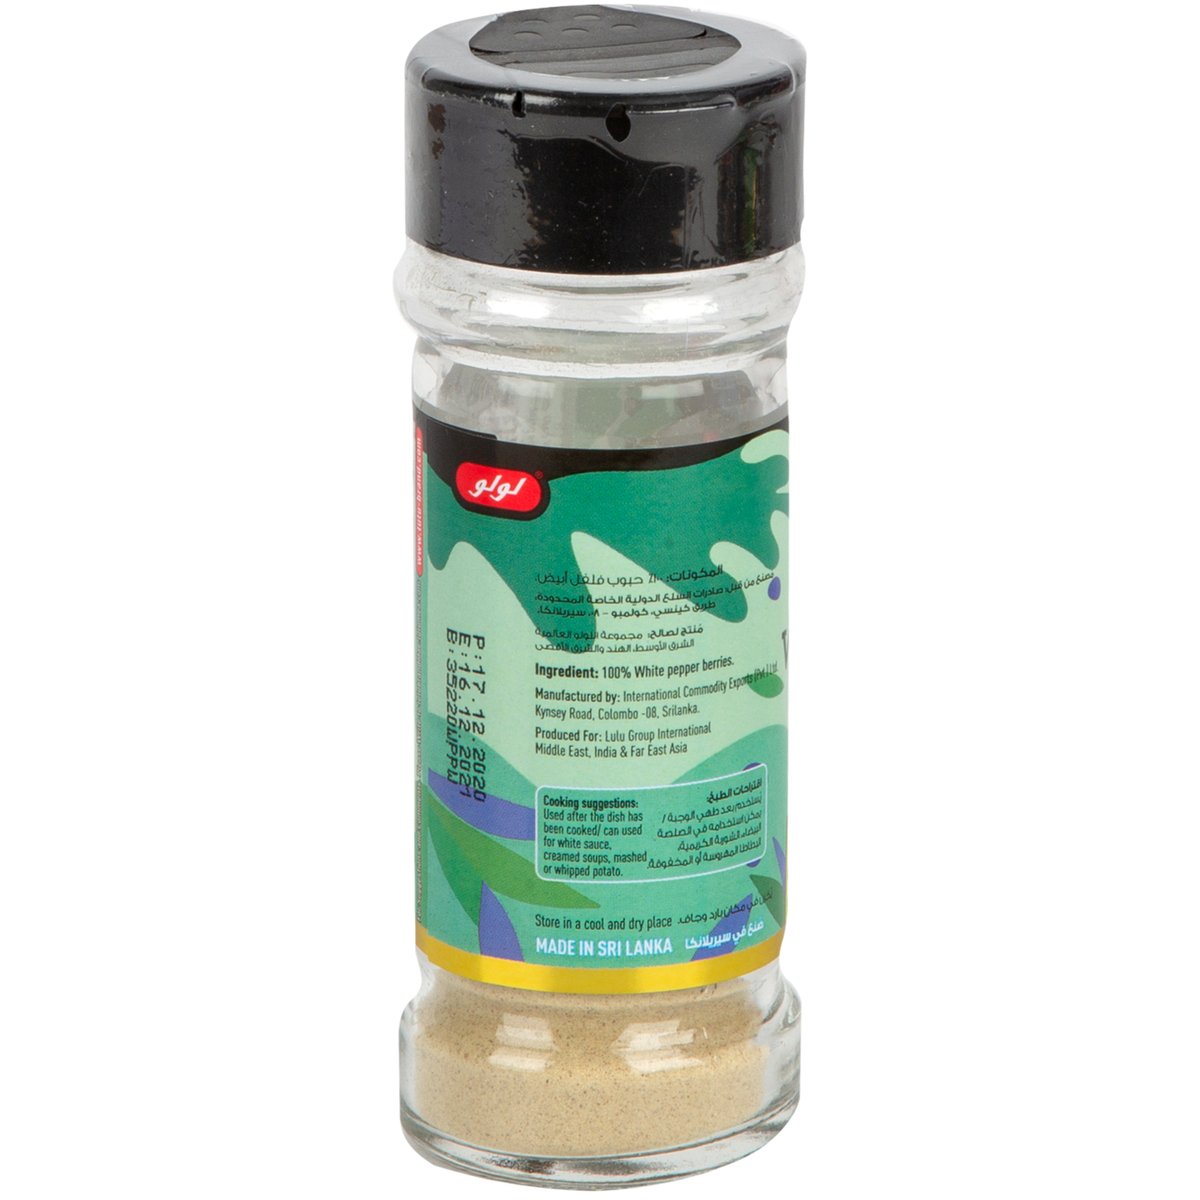 LuLu White Pepper Powder 40 g